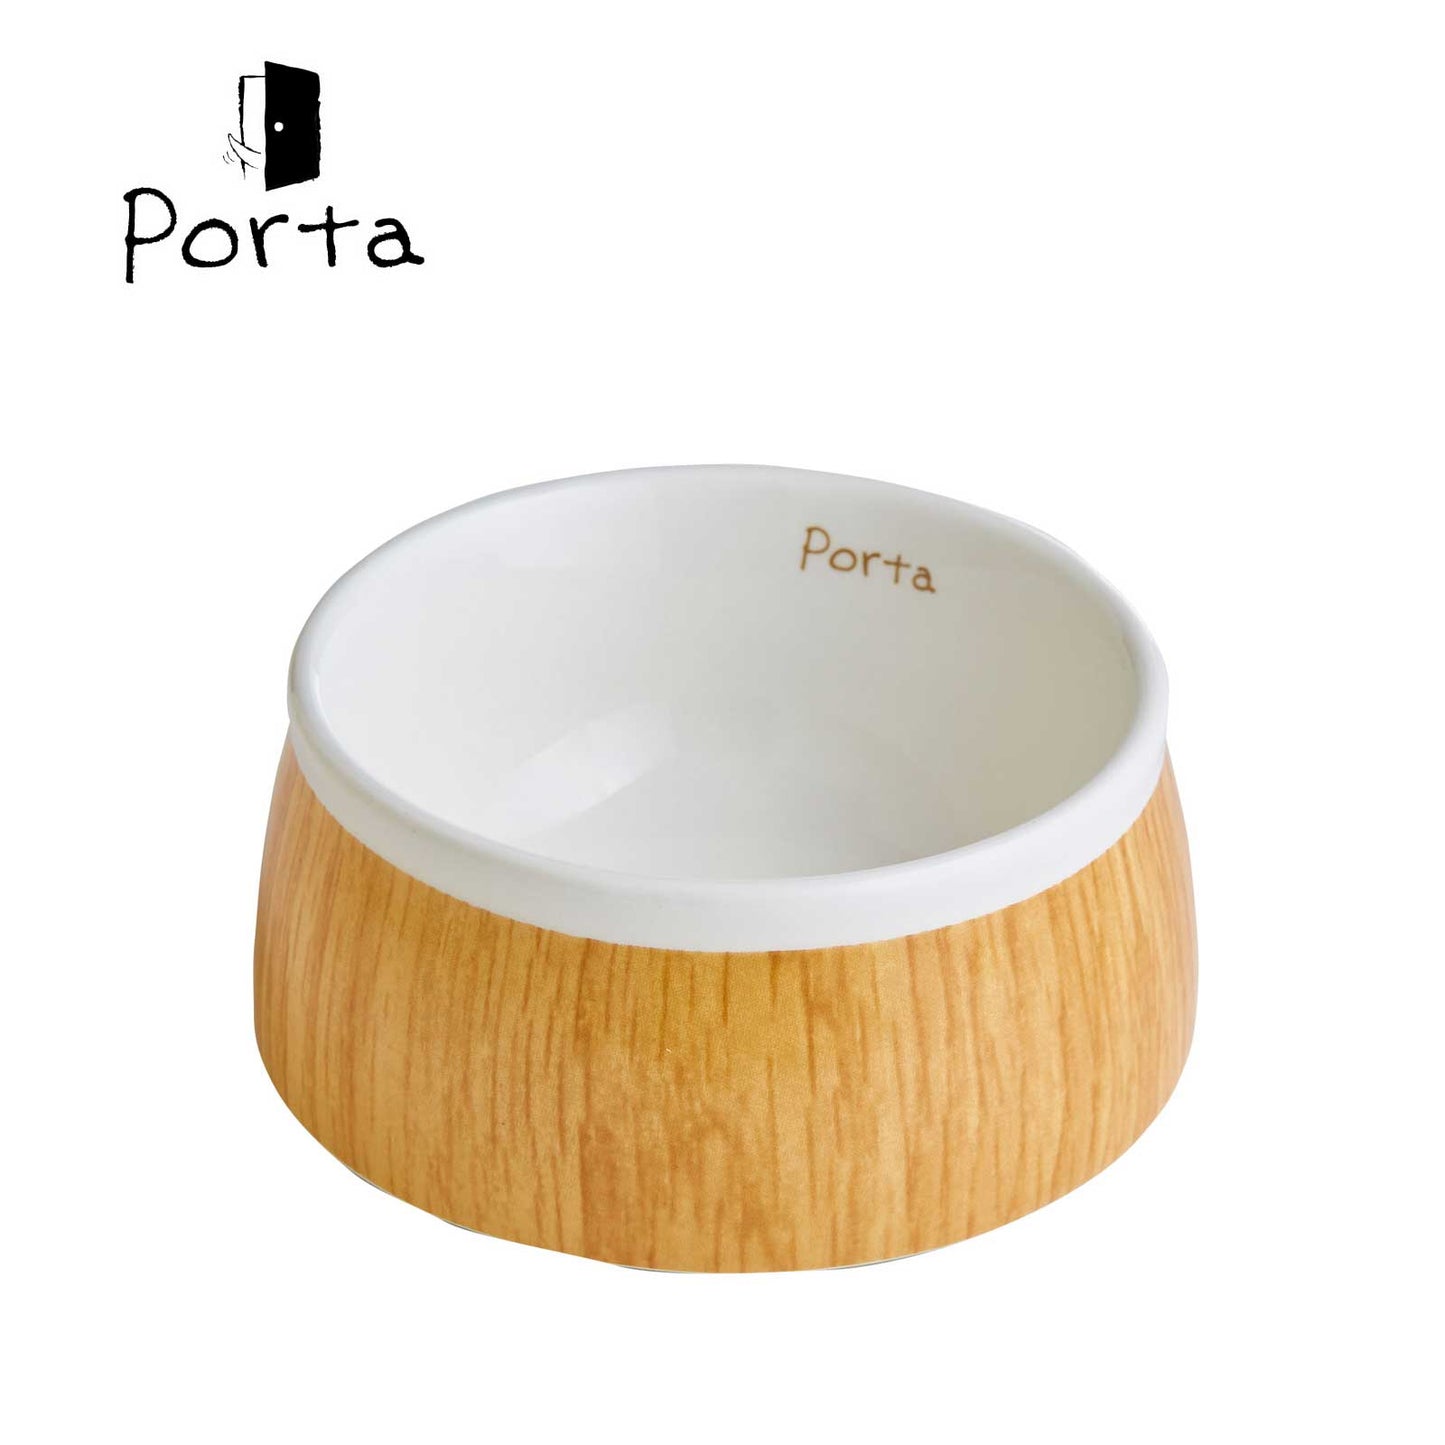 Petio Prota Wood Grain Ceramic Dog Feeding Bowl